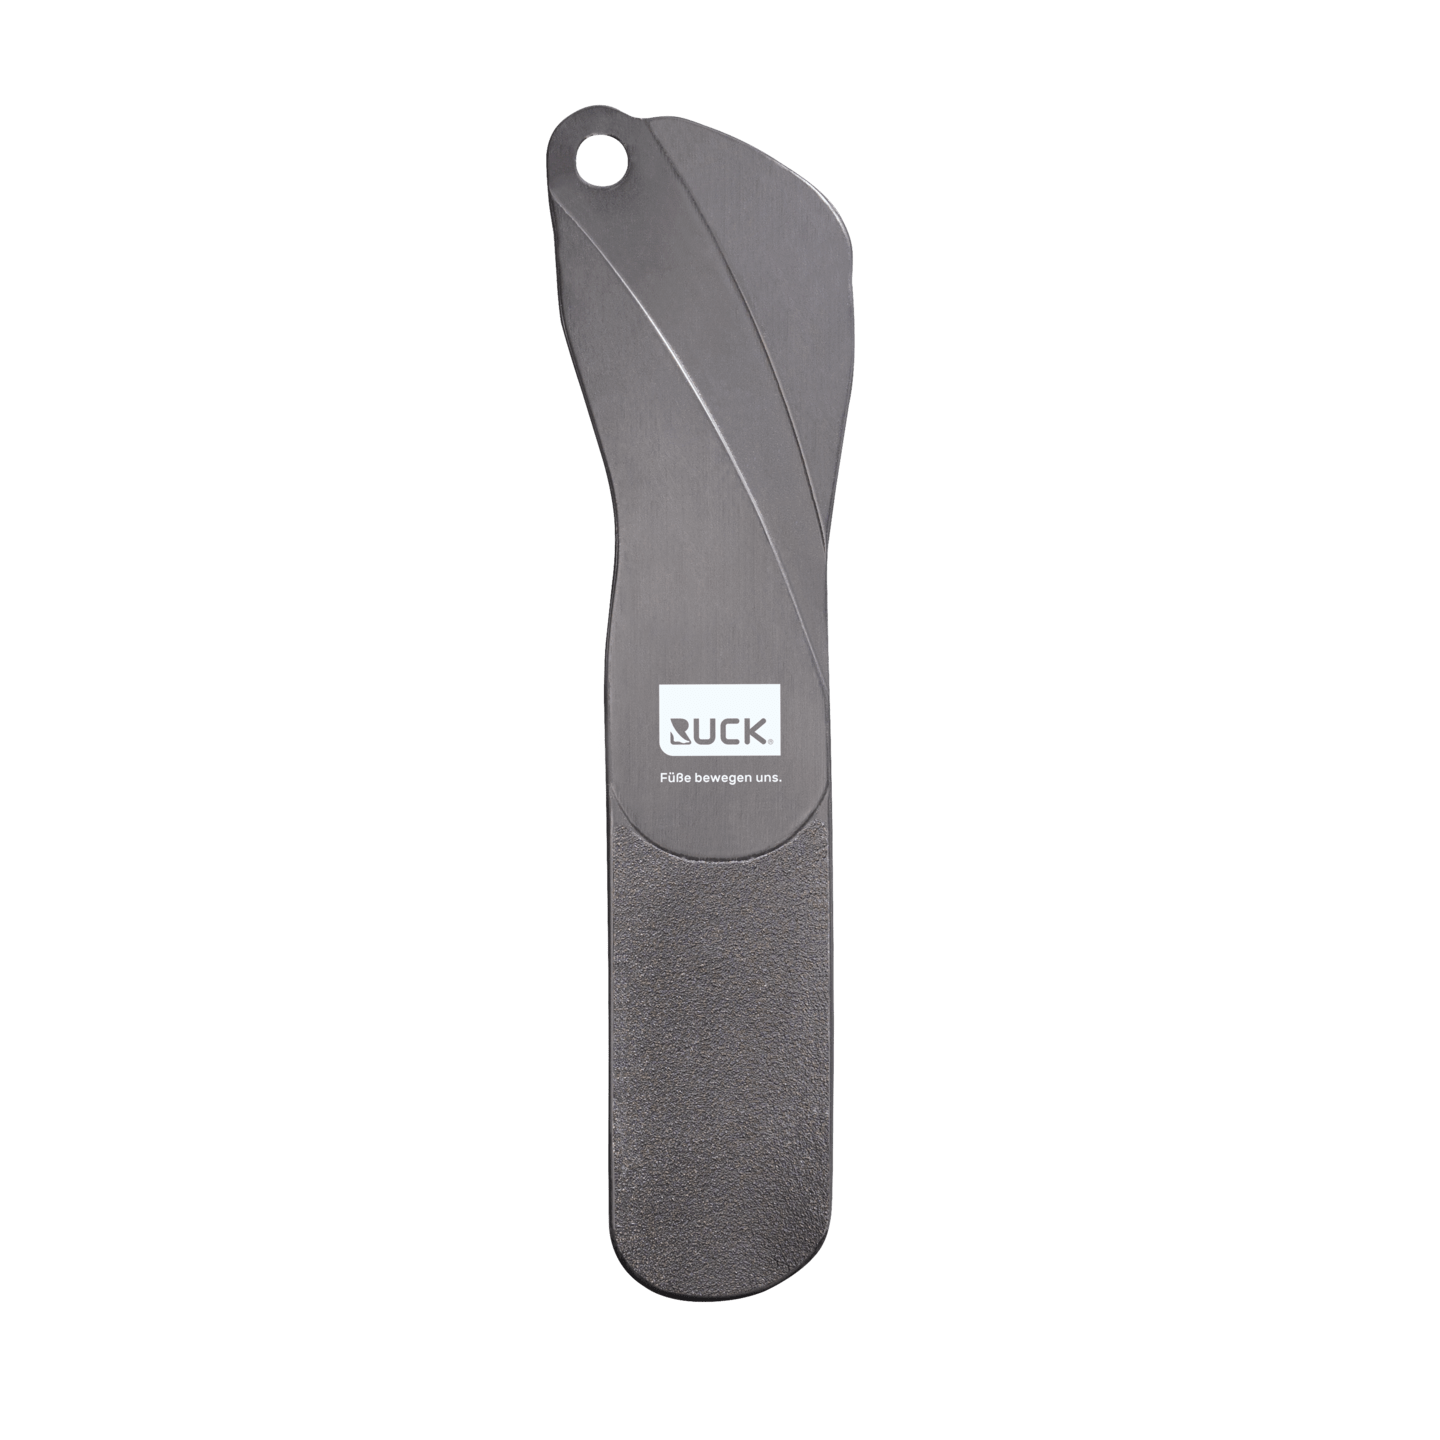 RUCK - Fußfeile, Kunststoff, 20 cm in schwarz